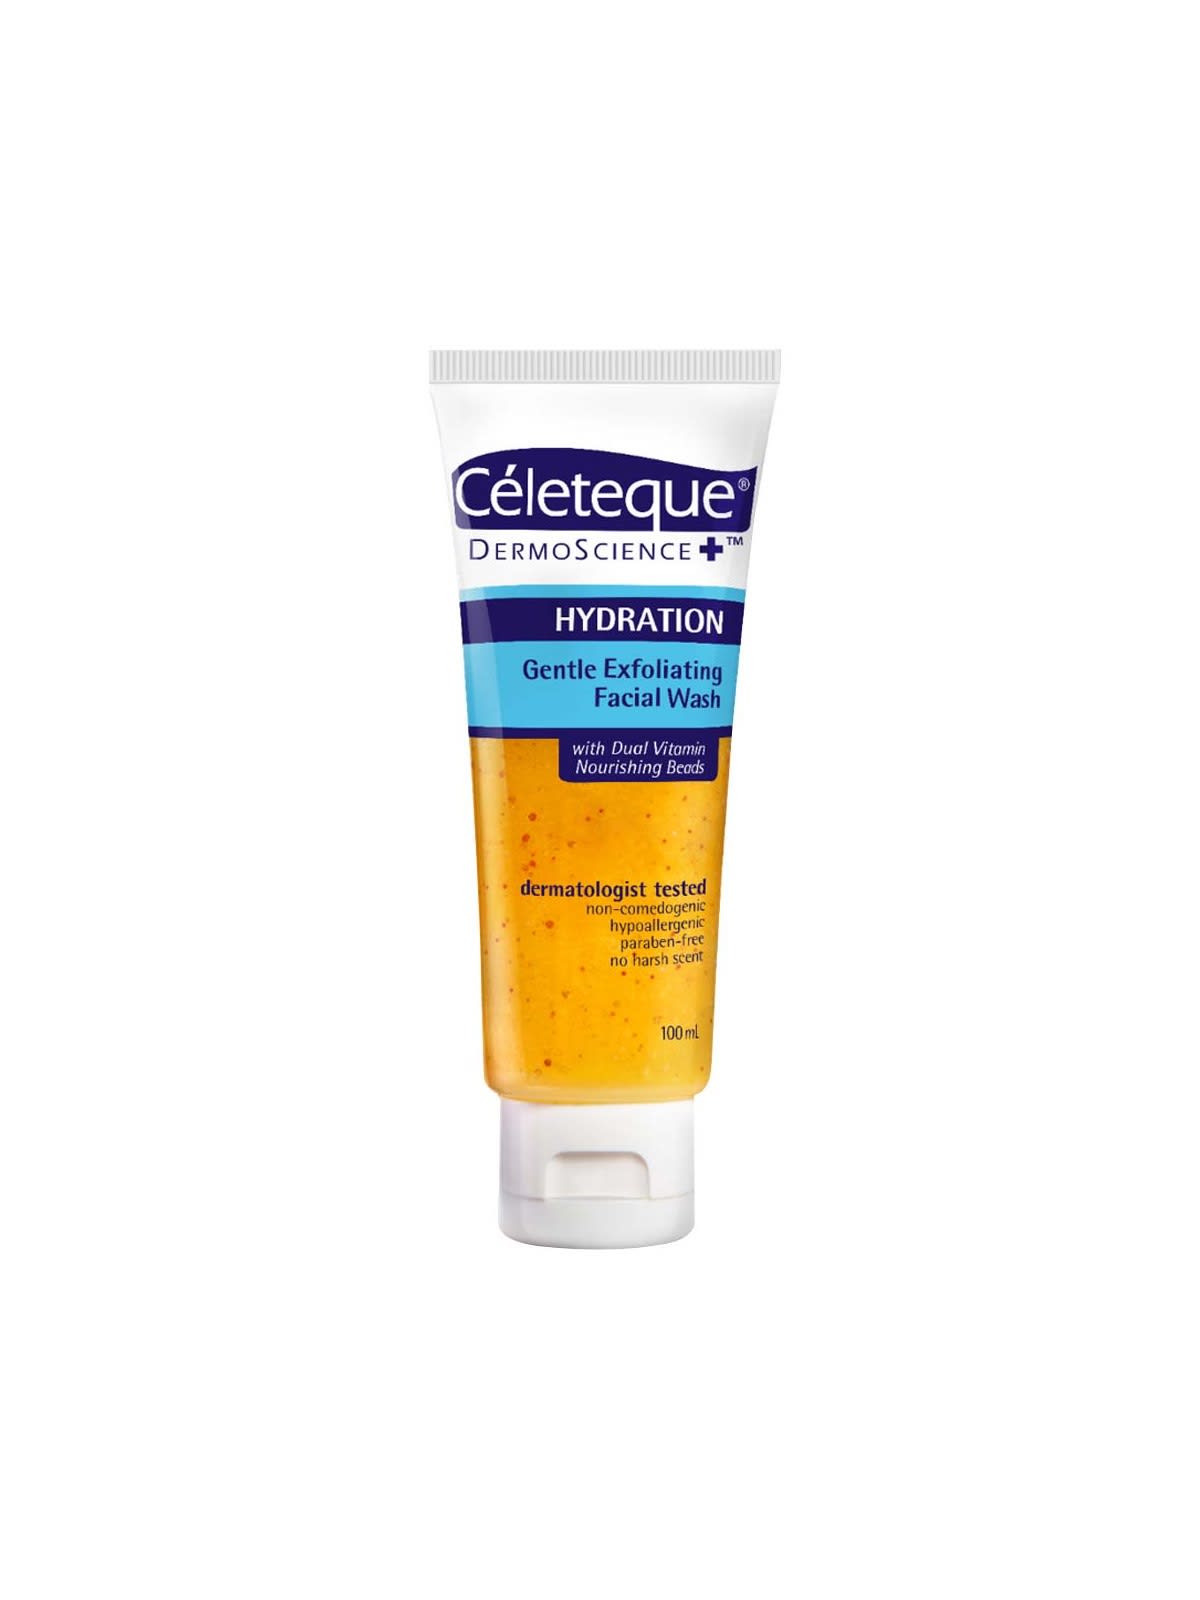 Celeteque Hydration Gentle Exfoliating Wash Acne Cleanser_1